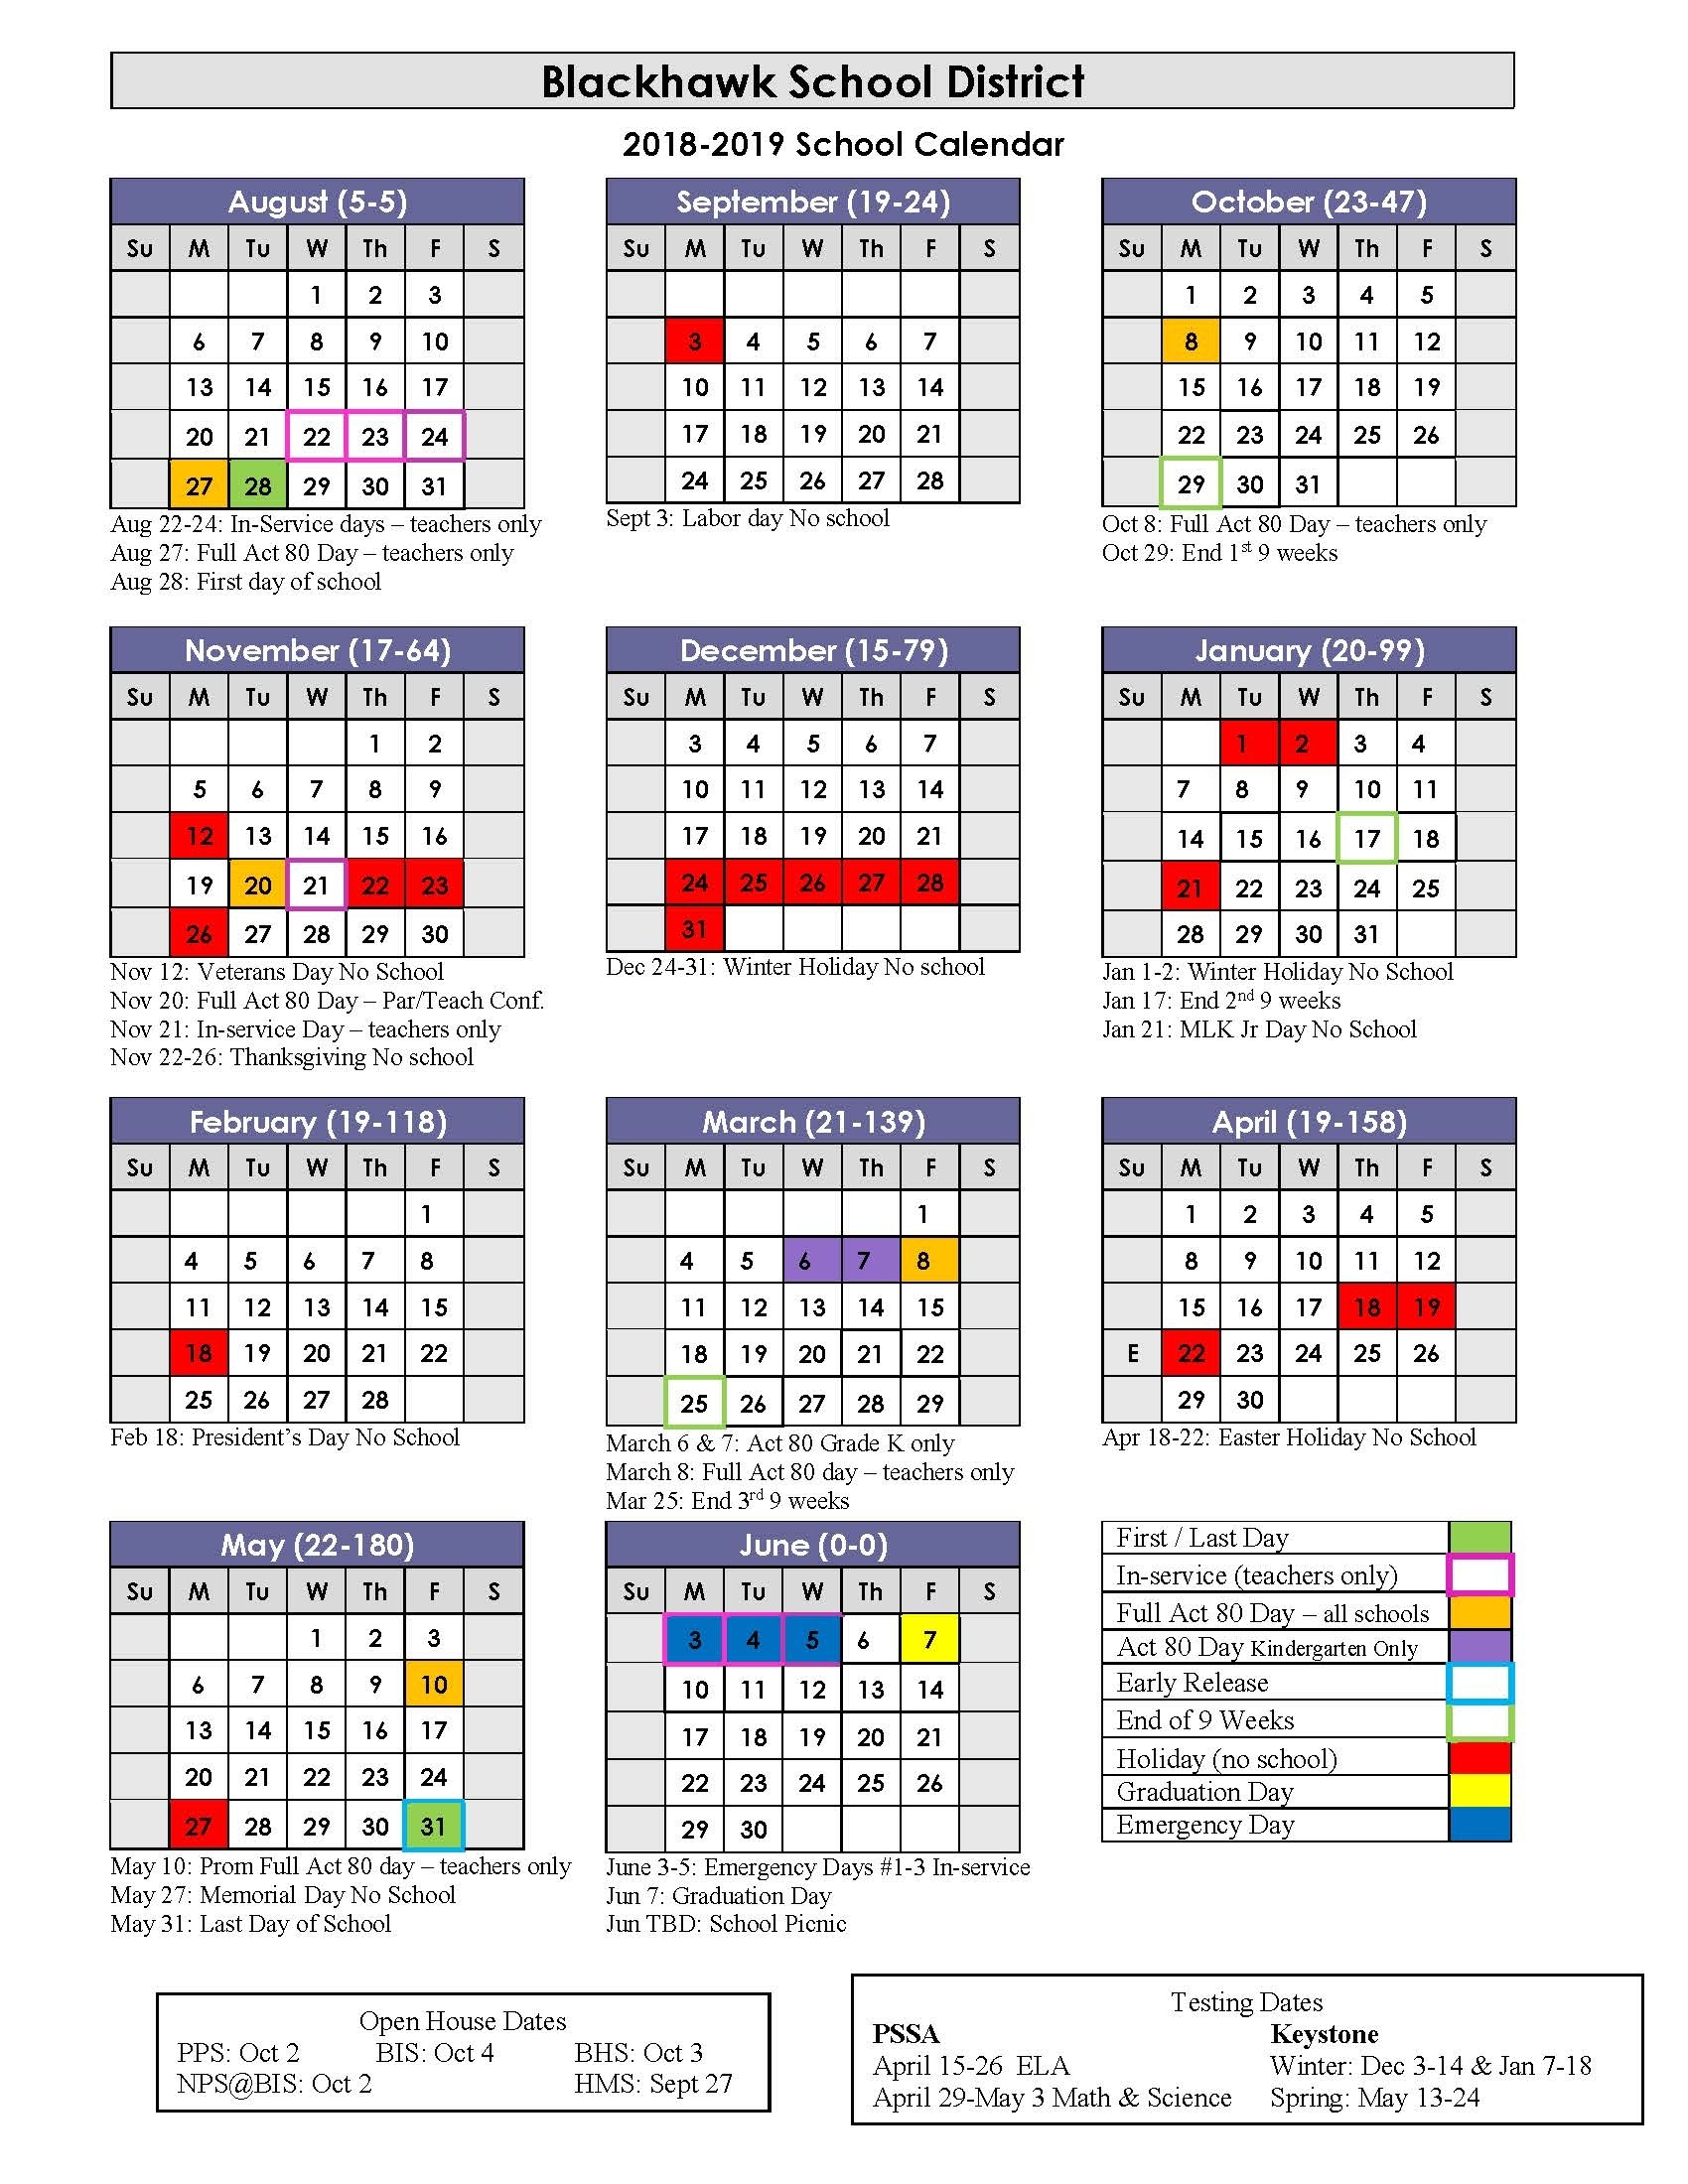 Blackhawk School District Calendar 2019 - Publicholidays Incredible School Calendar District 79